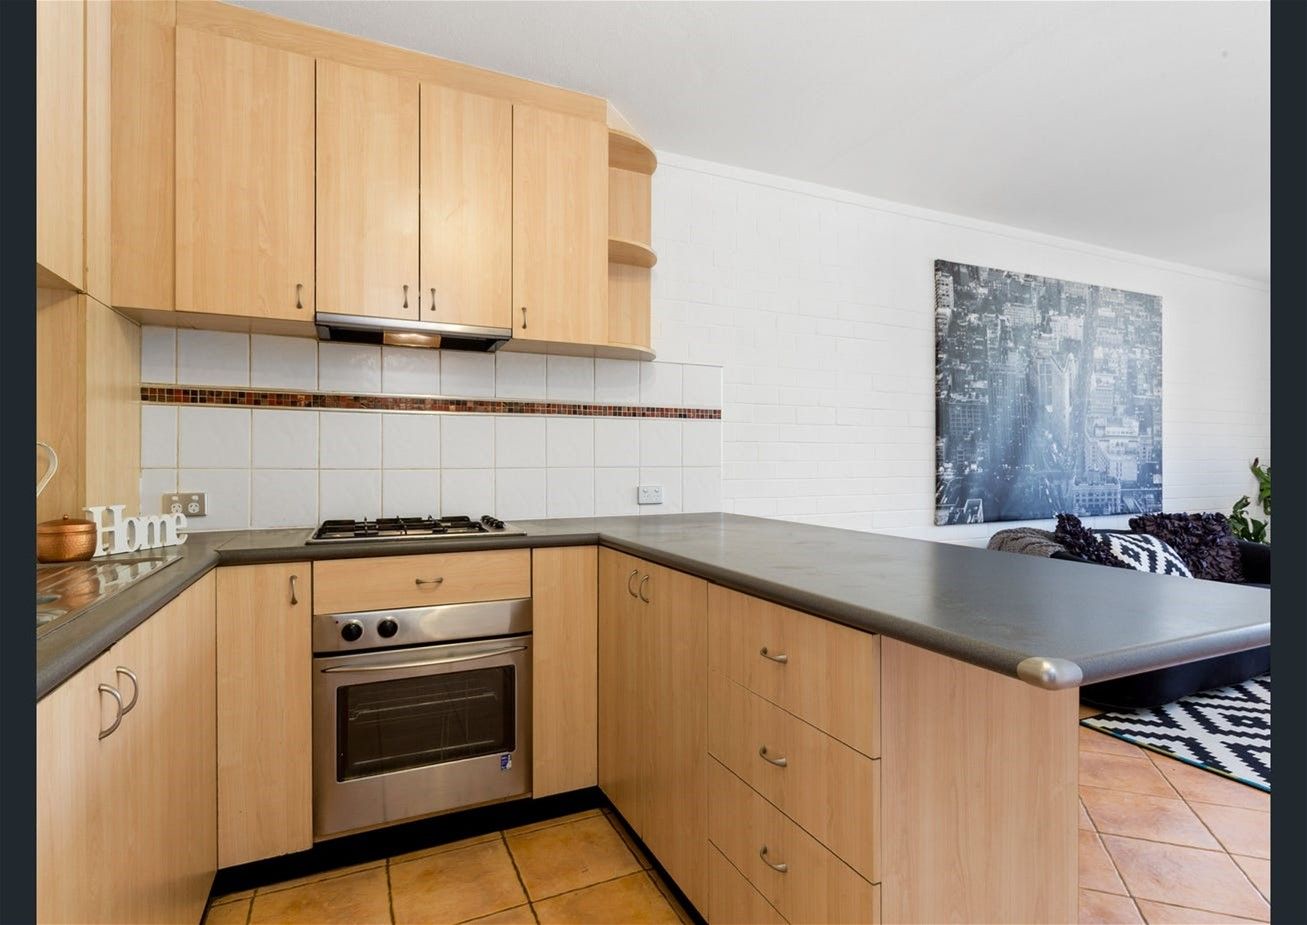 2 bedrooms Apartment / Unit / Flat in 15/31 Wellington Street MOSMAN PARK WA, 6012